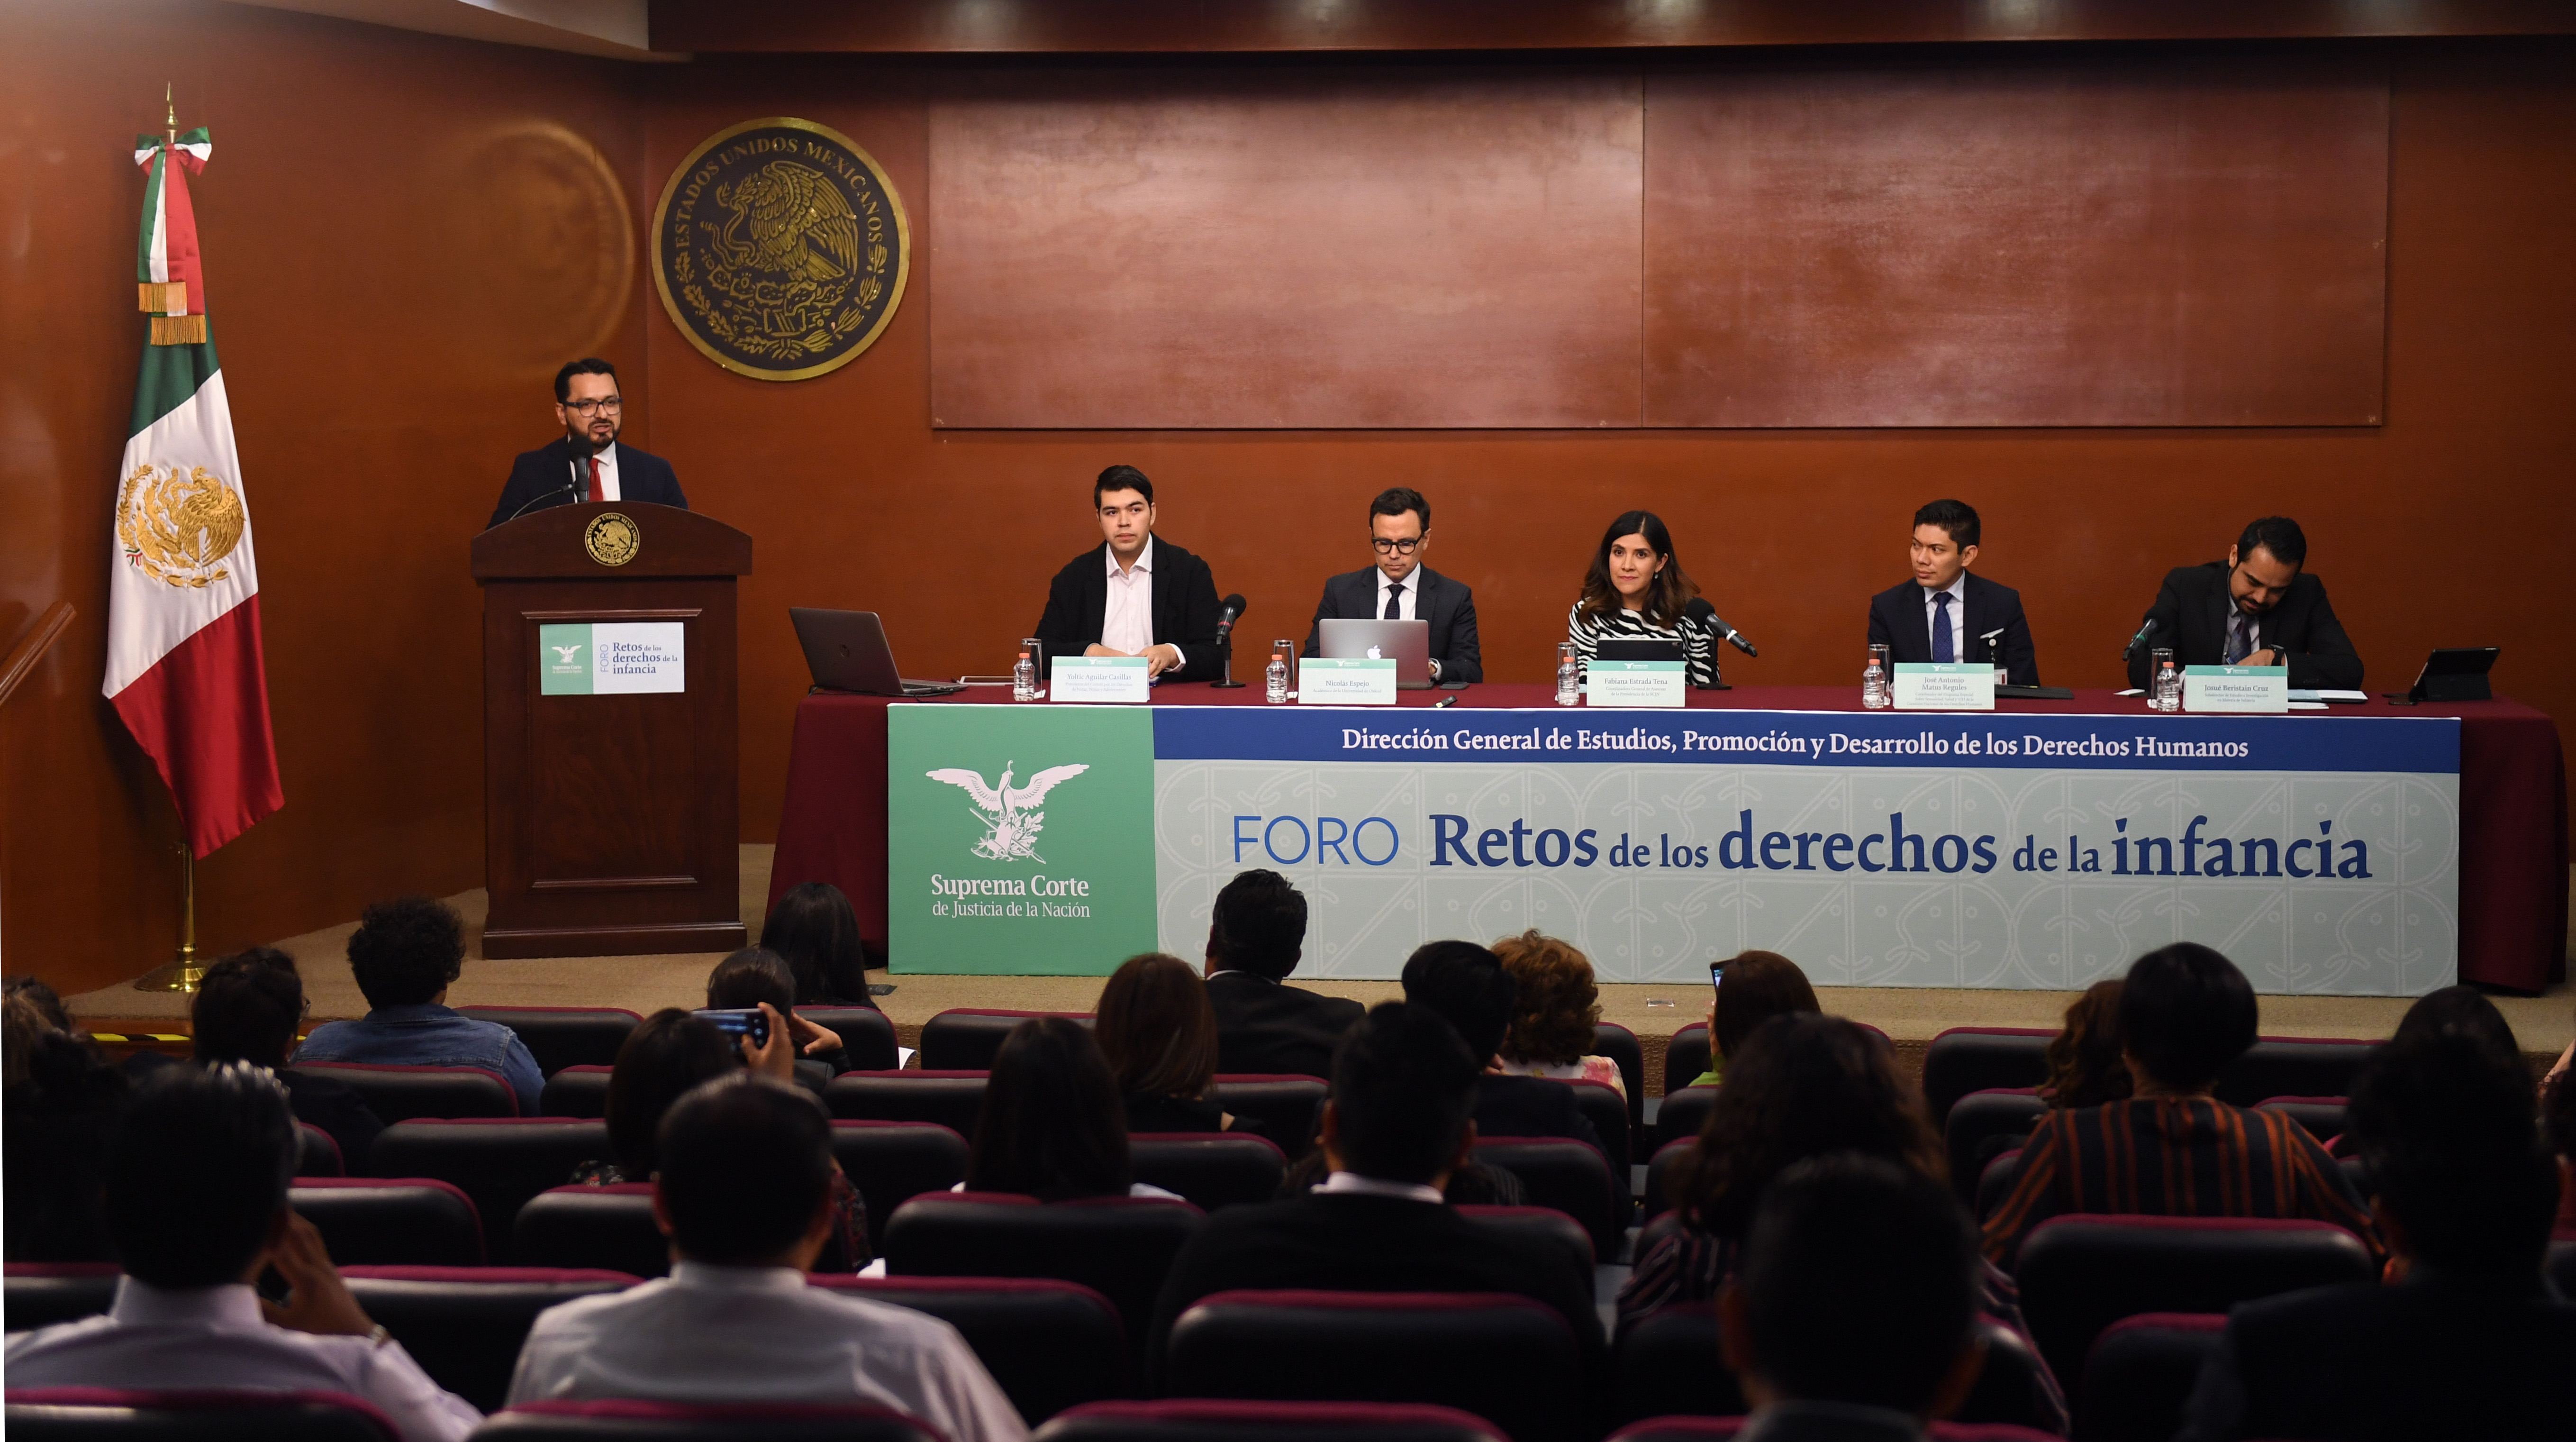 Doctor Arturo Bárcena Zubieta, Nicolás Espejo, Fabiana Estrada Tena, José Antonio Matus Regules, Josué Beristain Cruz